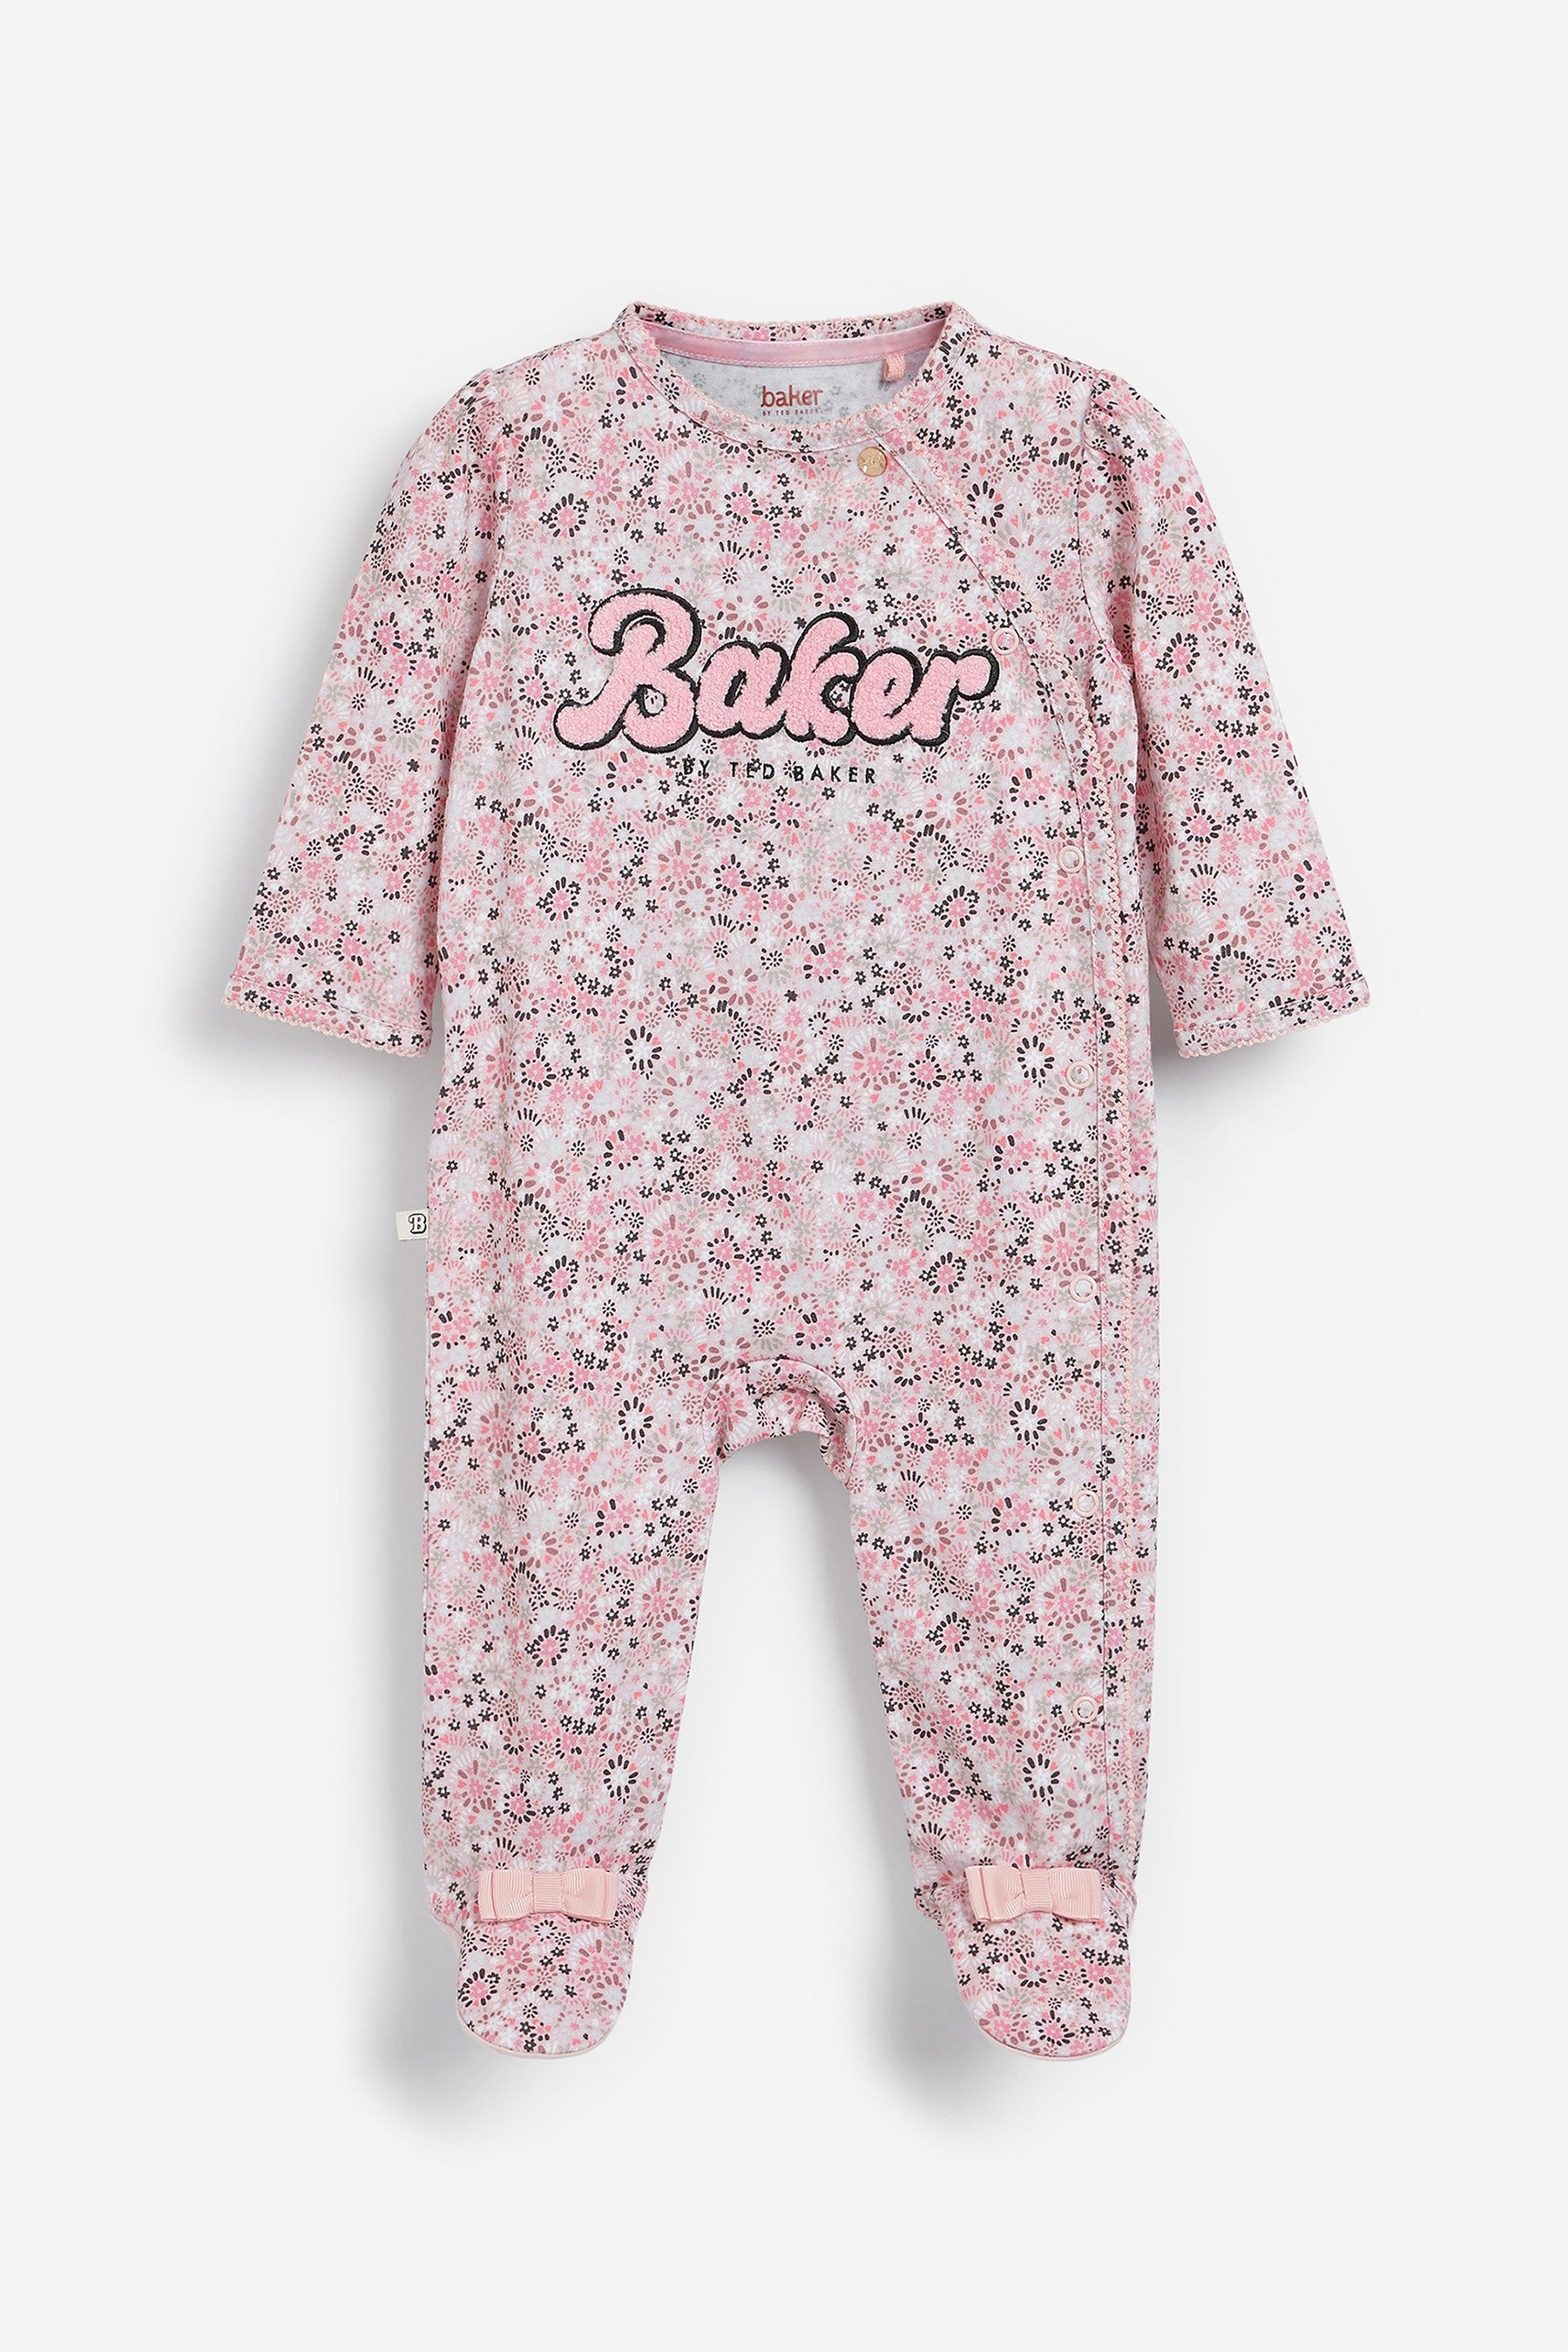 Baker by Ted Baker Pink Printed Sleepsuit